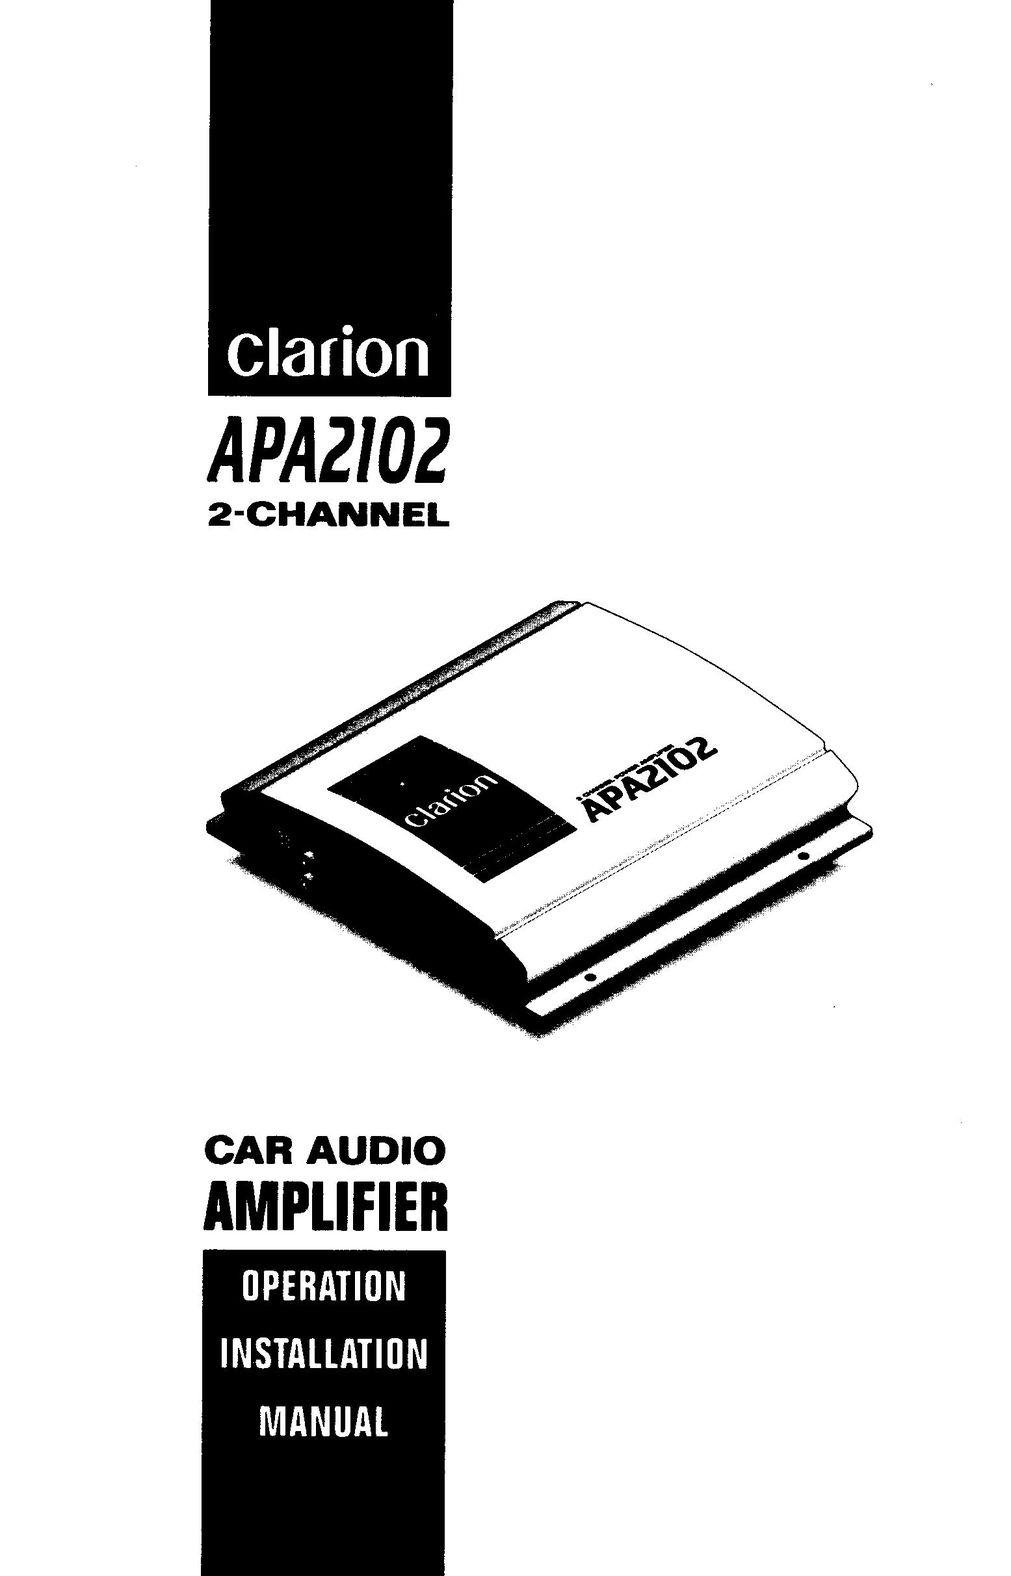 Clarion apa2102 Car Amplifier User Manual